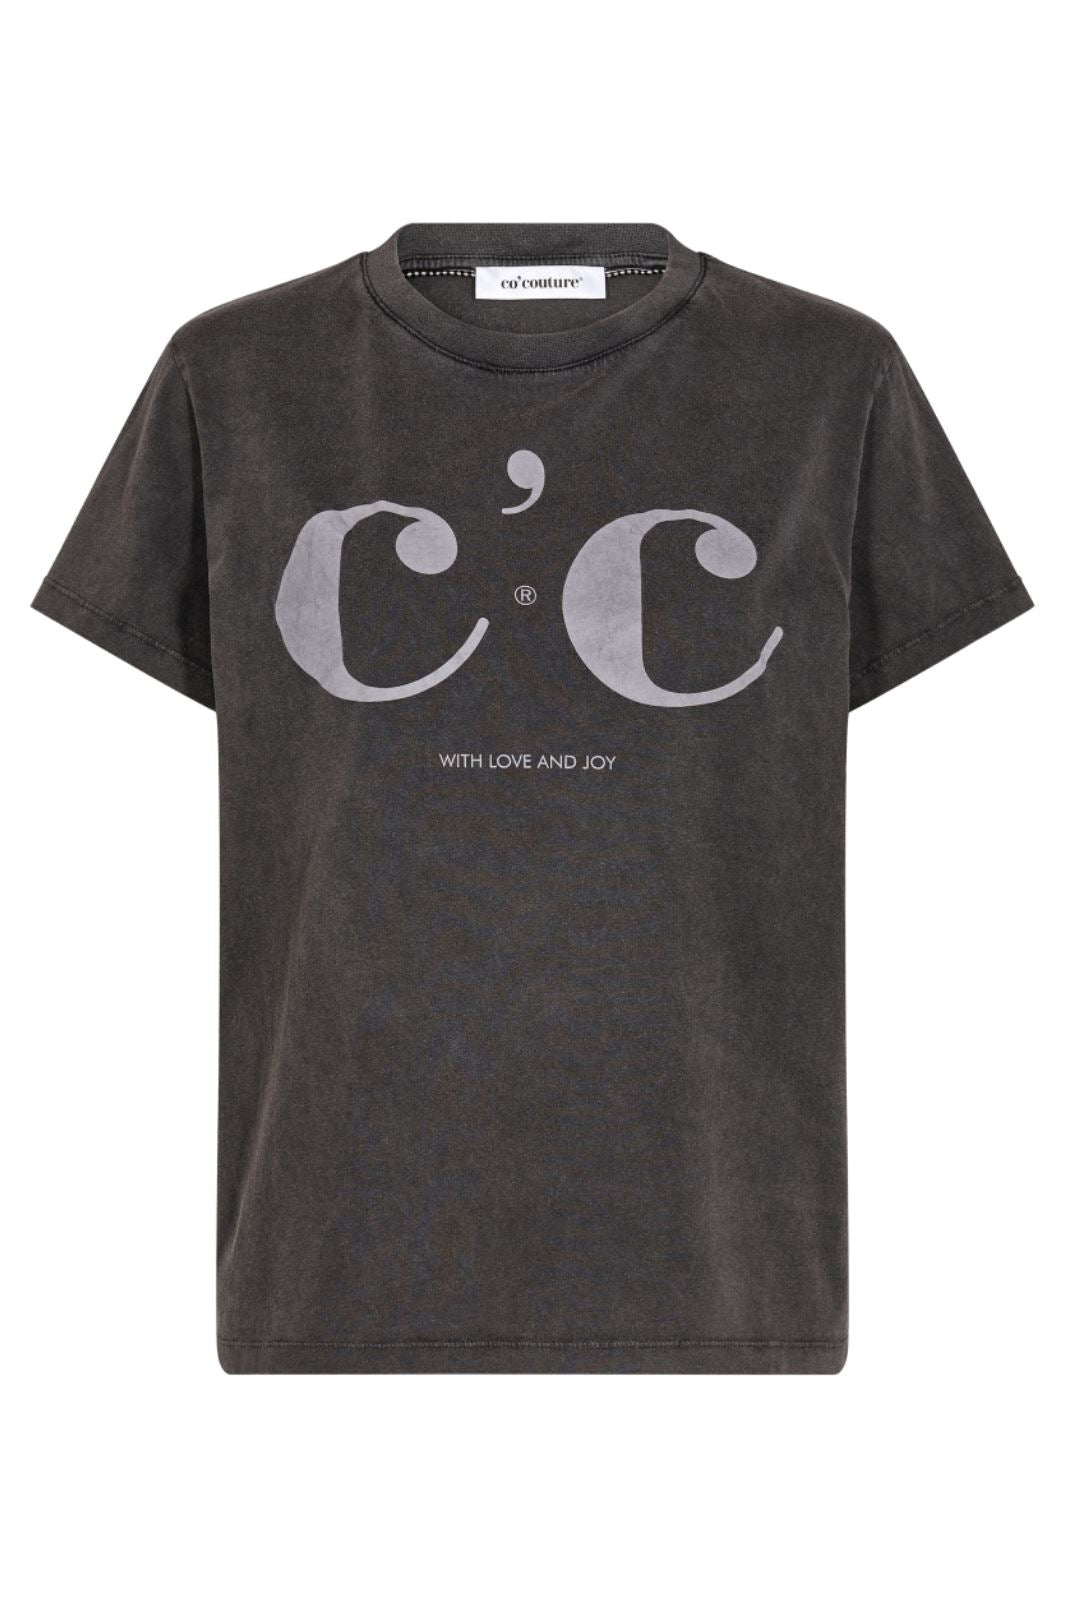 Co´couture - Cc Acidcc Tee - 96 Black T-shirts 